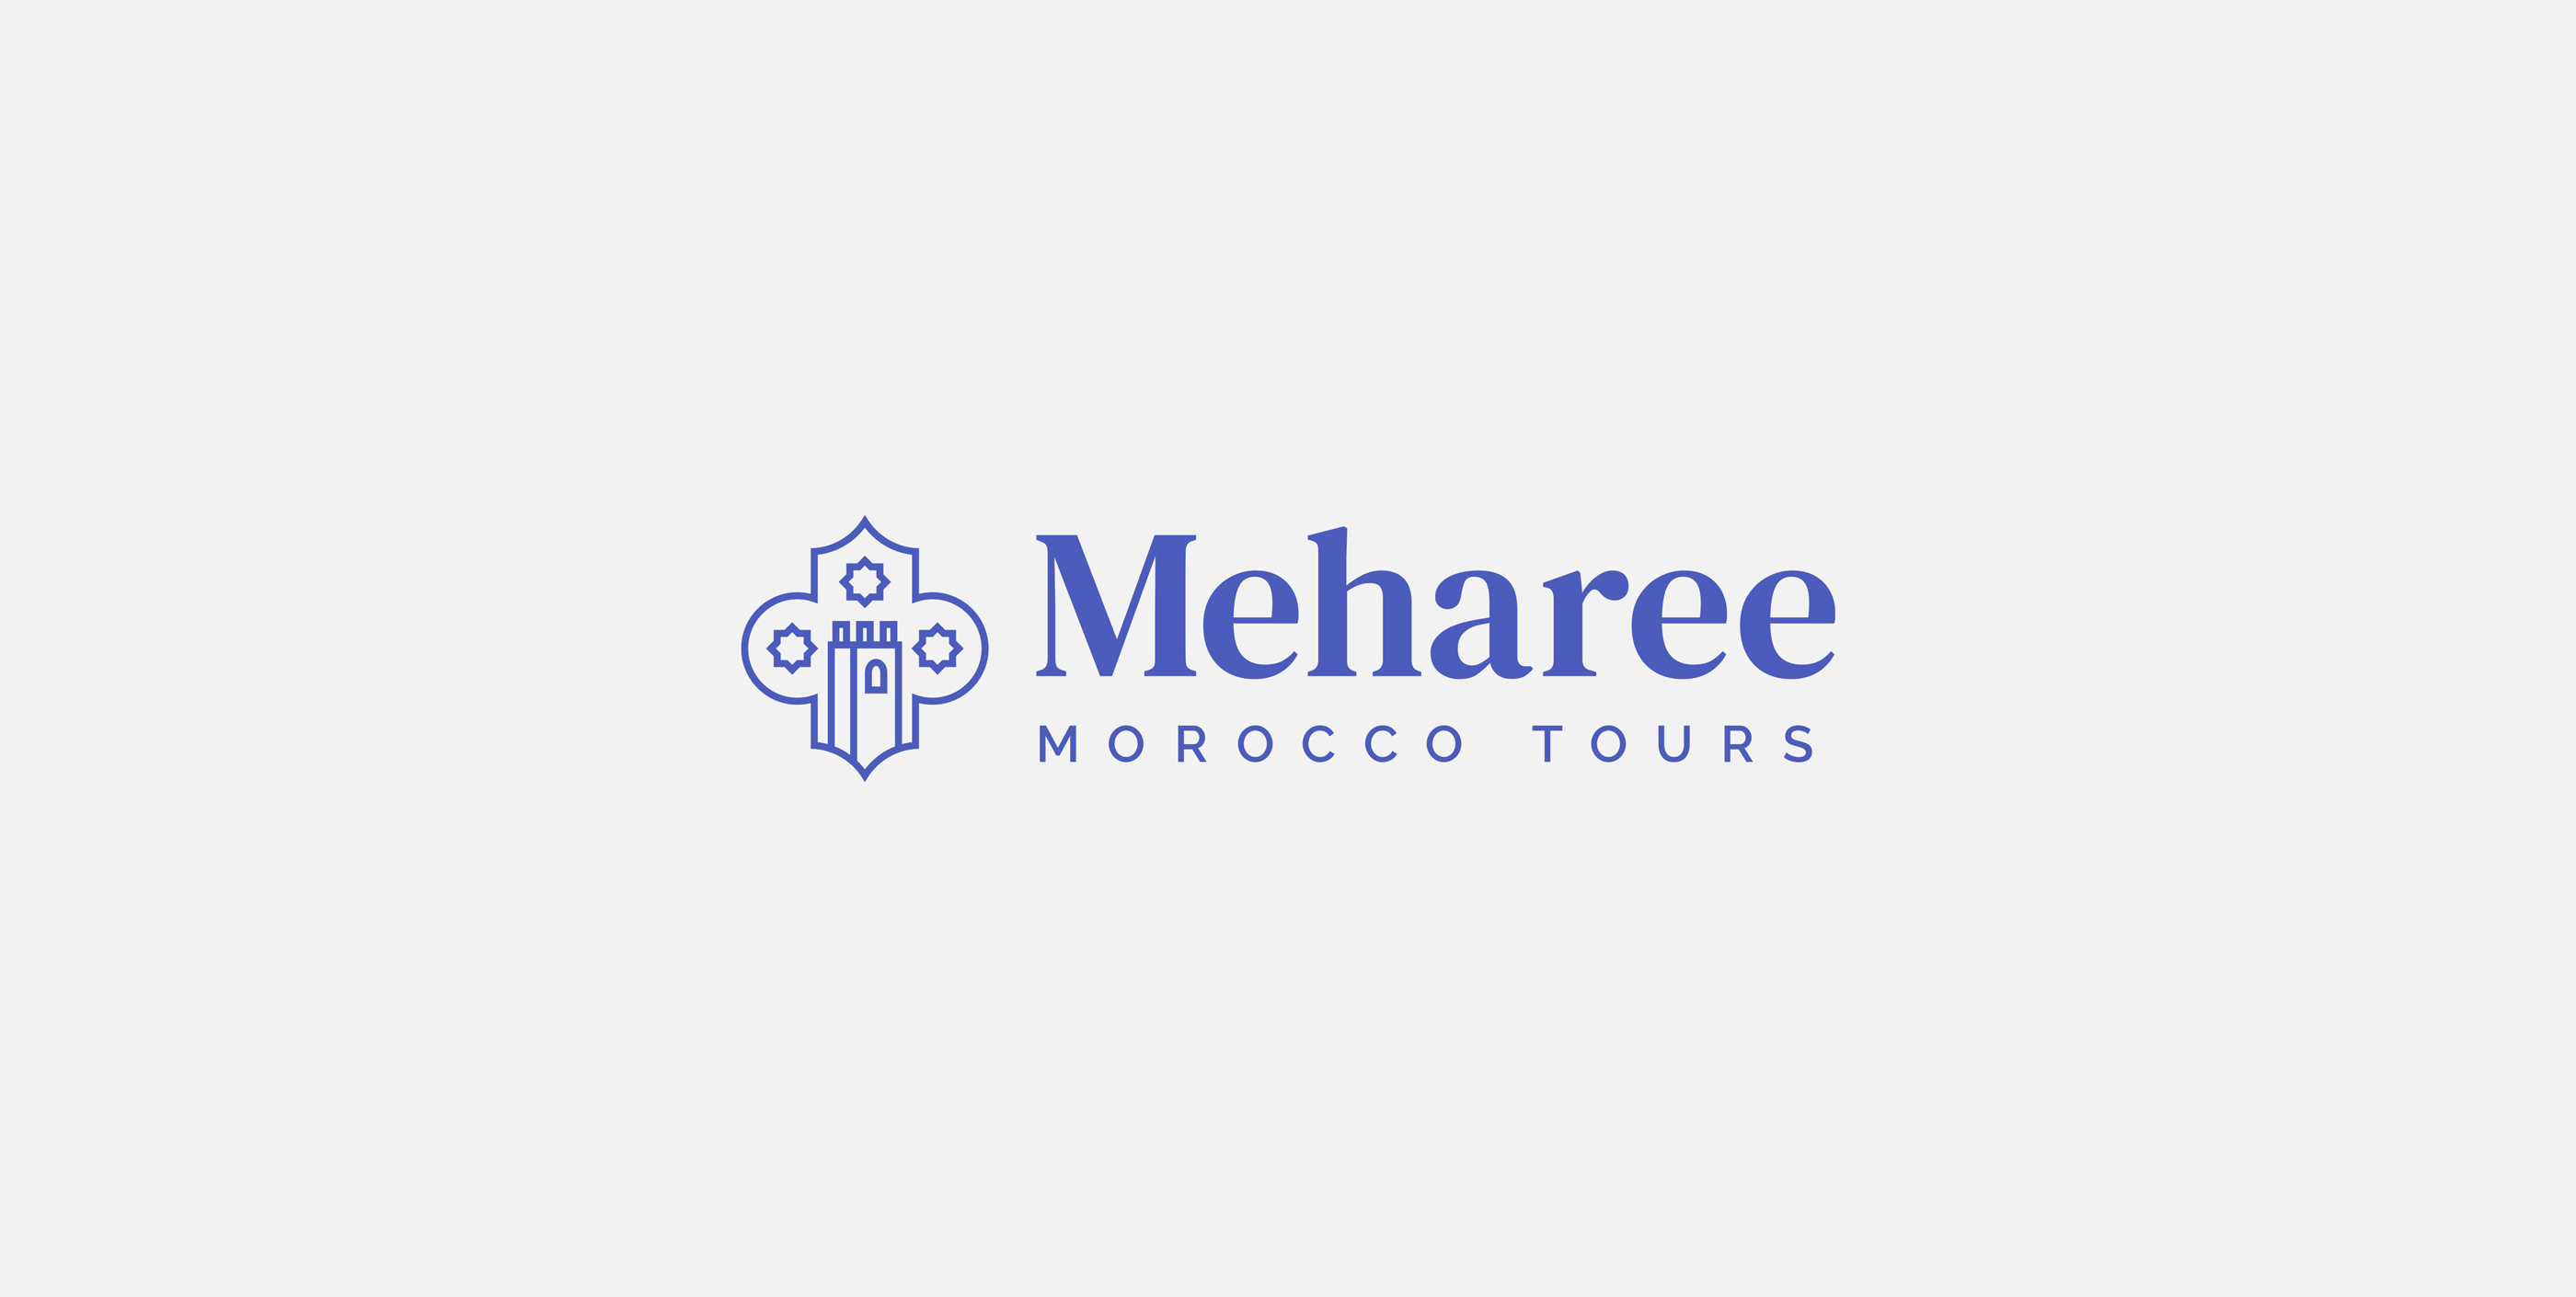 Meharee Morocco Tours Logo Design by Karbon Branding